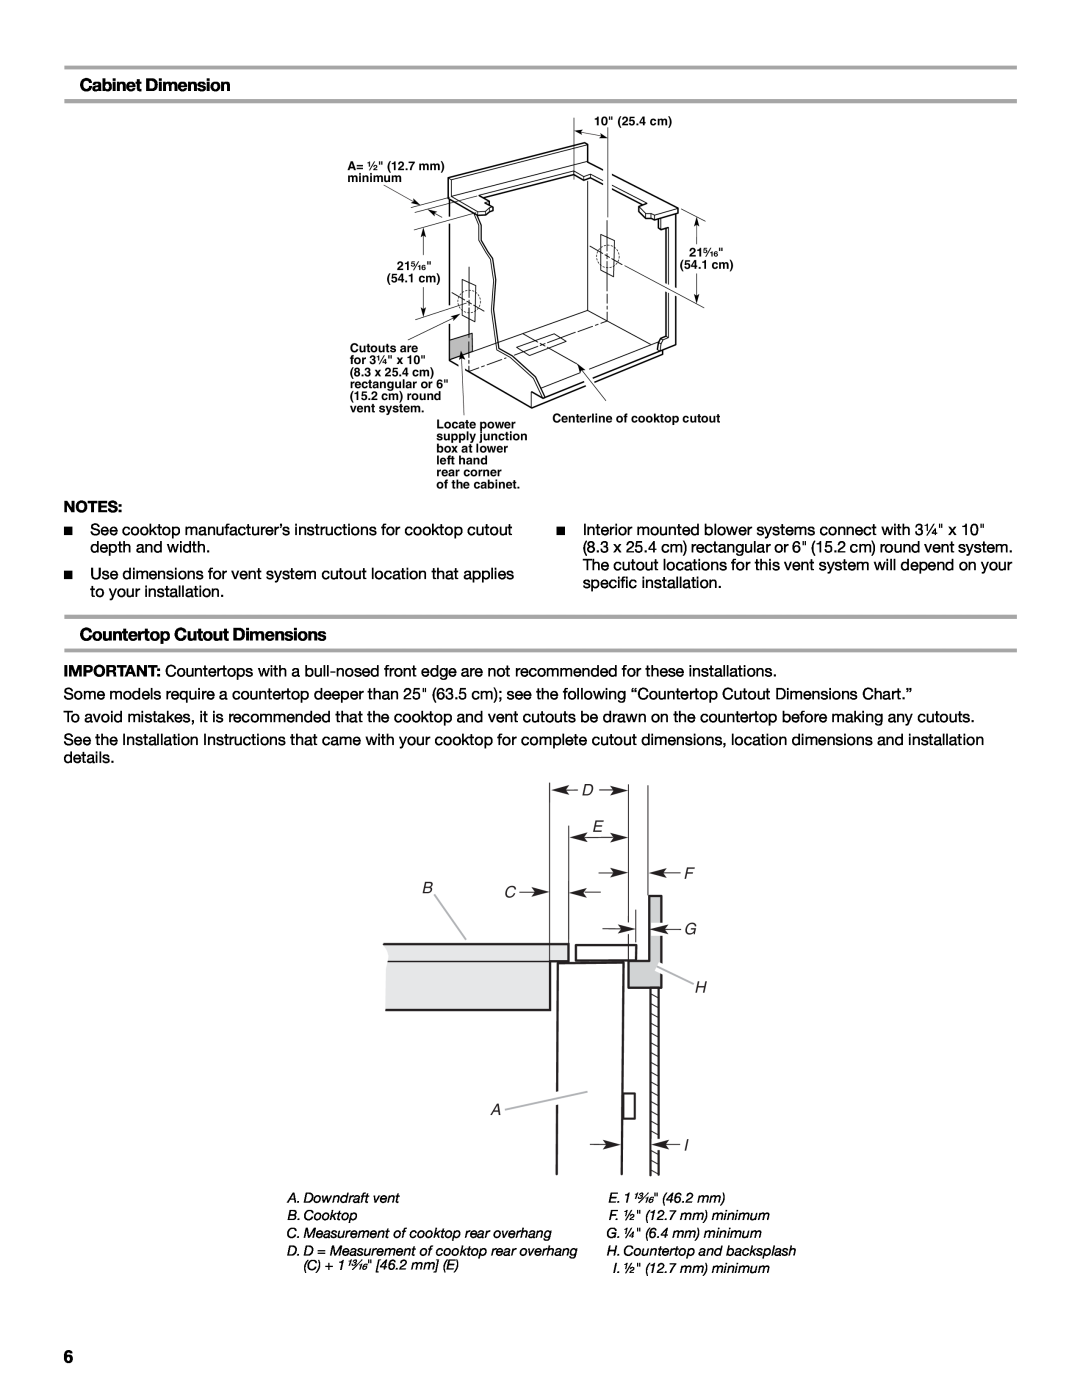 Jenn-Air LI3ZVB/W10342490D installation instructions Cabinet Dimension, Countertop Cutout Dimensions, D E F B C G H A I 